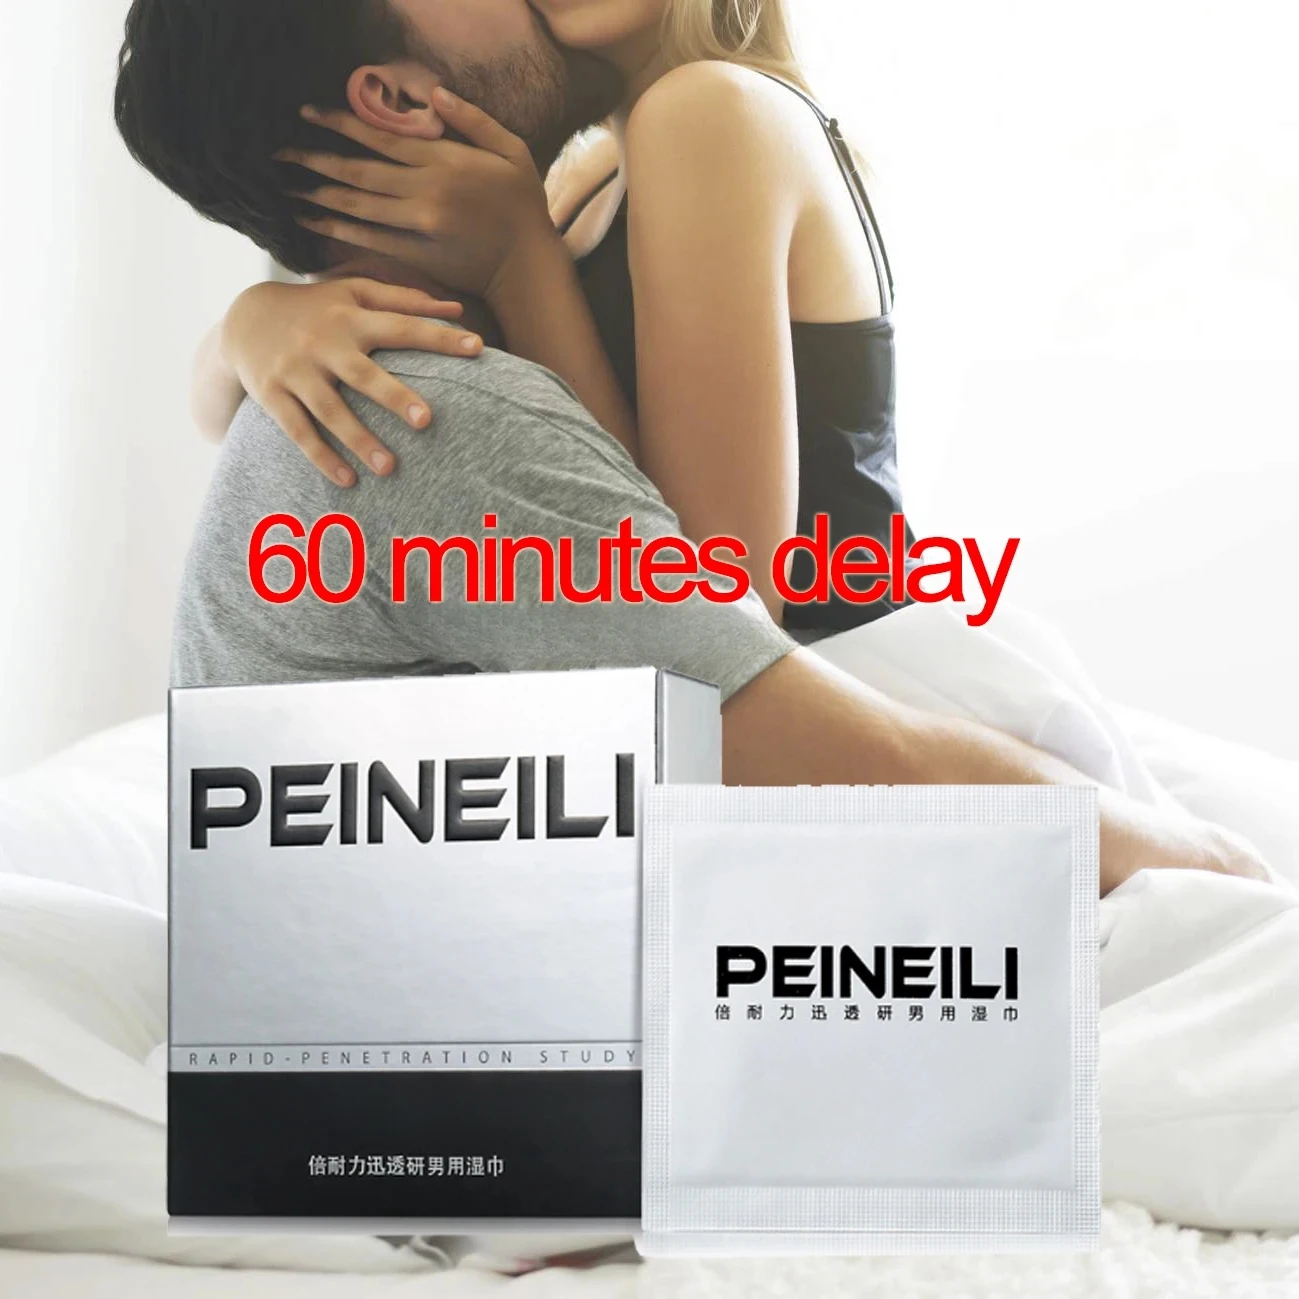 

Peineili Portable 60 Minutes Long Lasting Power Delay Men Wet Tissues Wet Wipes Men's Penis Delay For Travel Hotel 12pcs per box